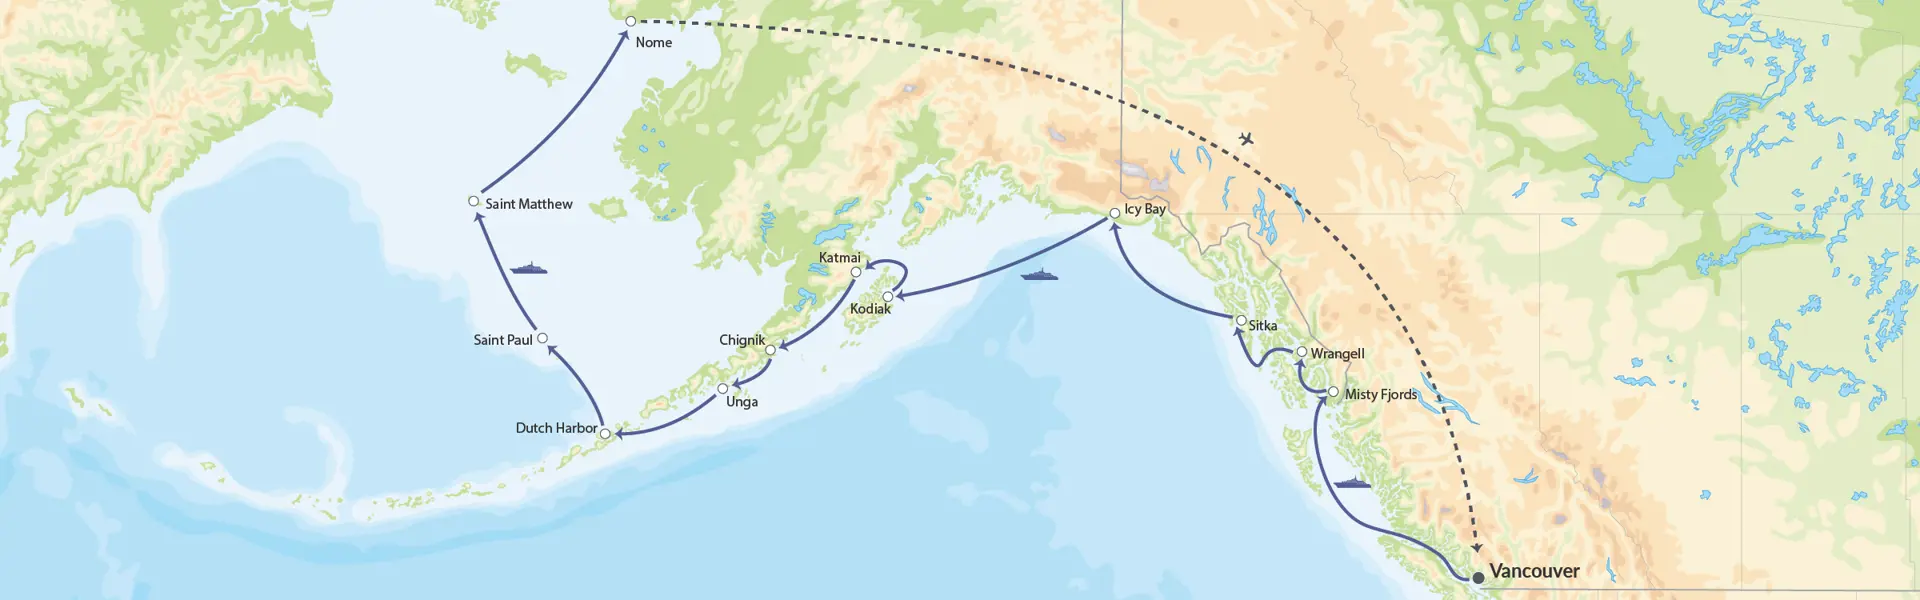 DK Hurtigruten Alaska Map